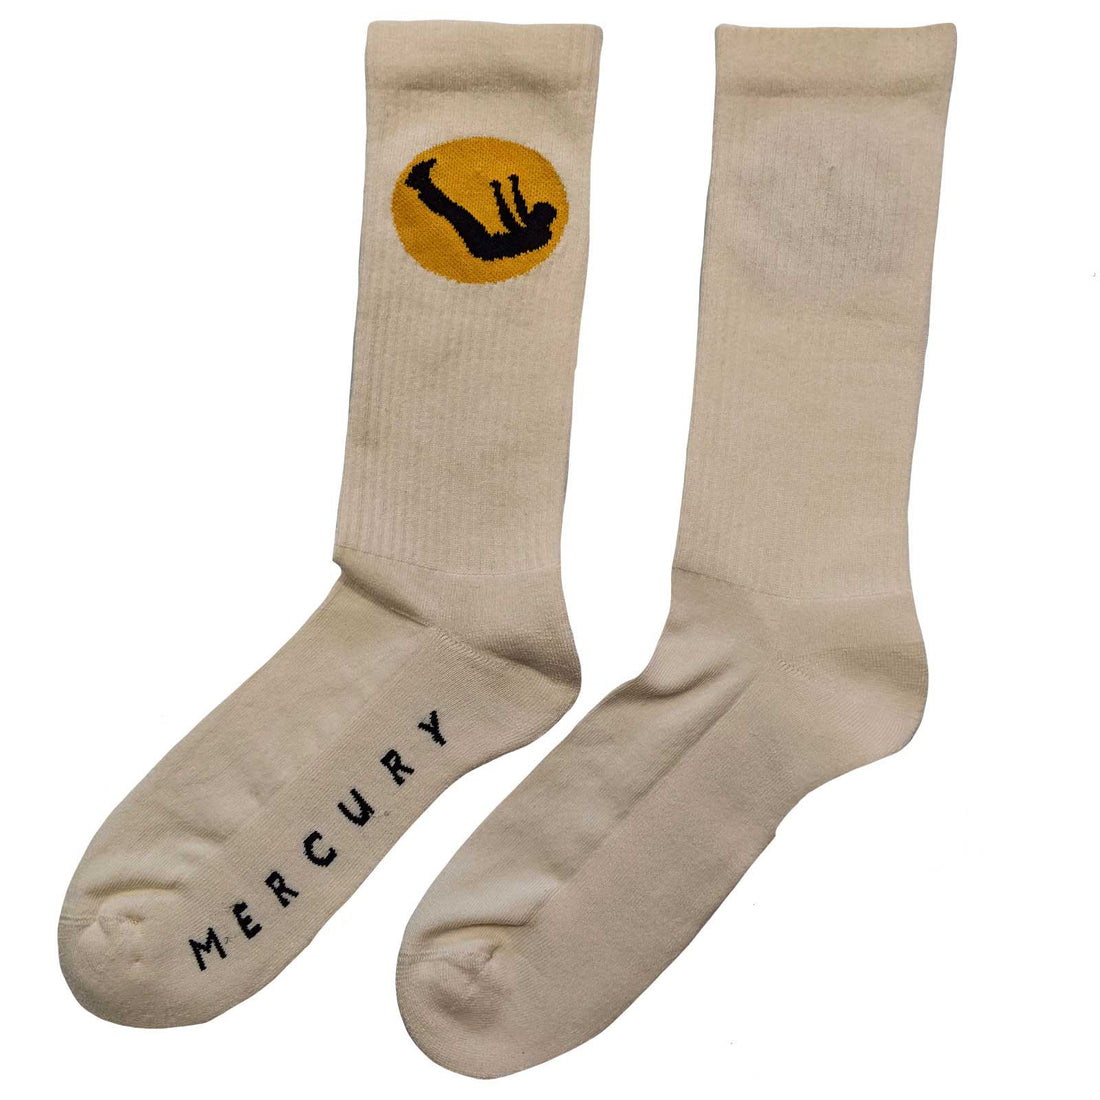 Imagine Dragons Ankle Socks: Mercury (US Size 8 - 10)